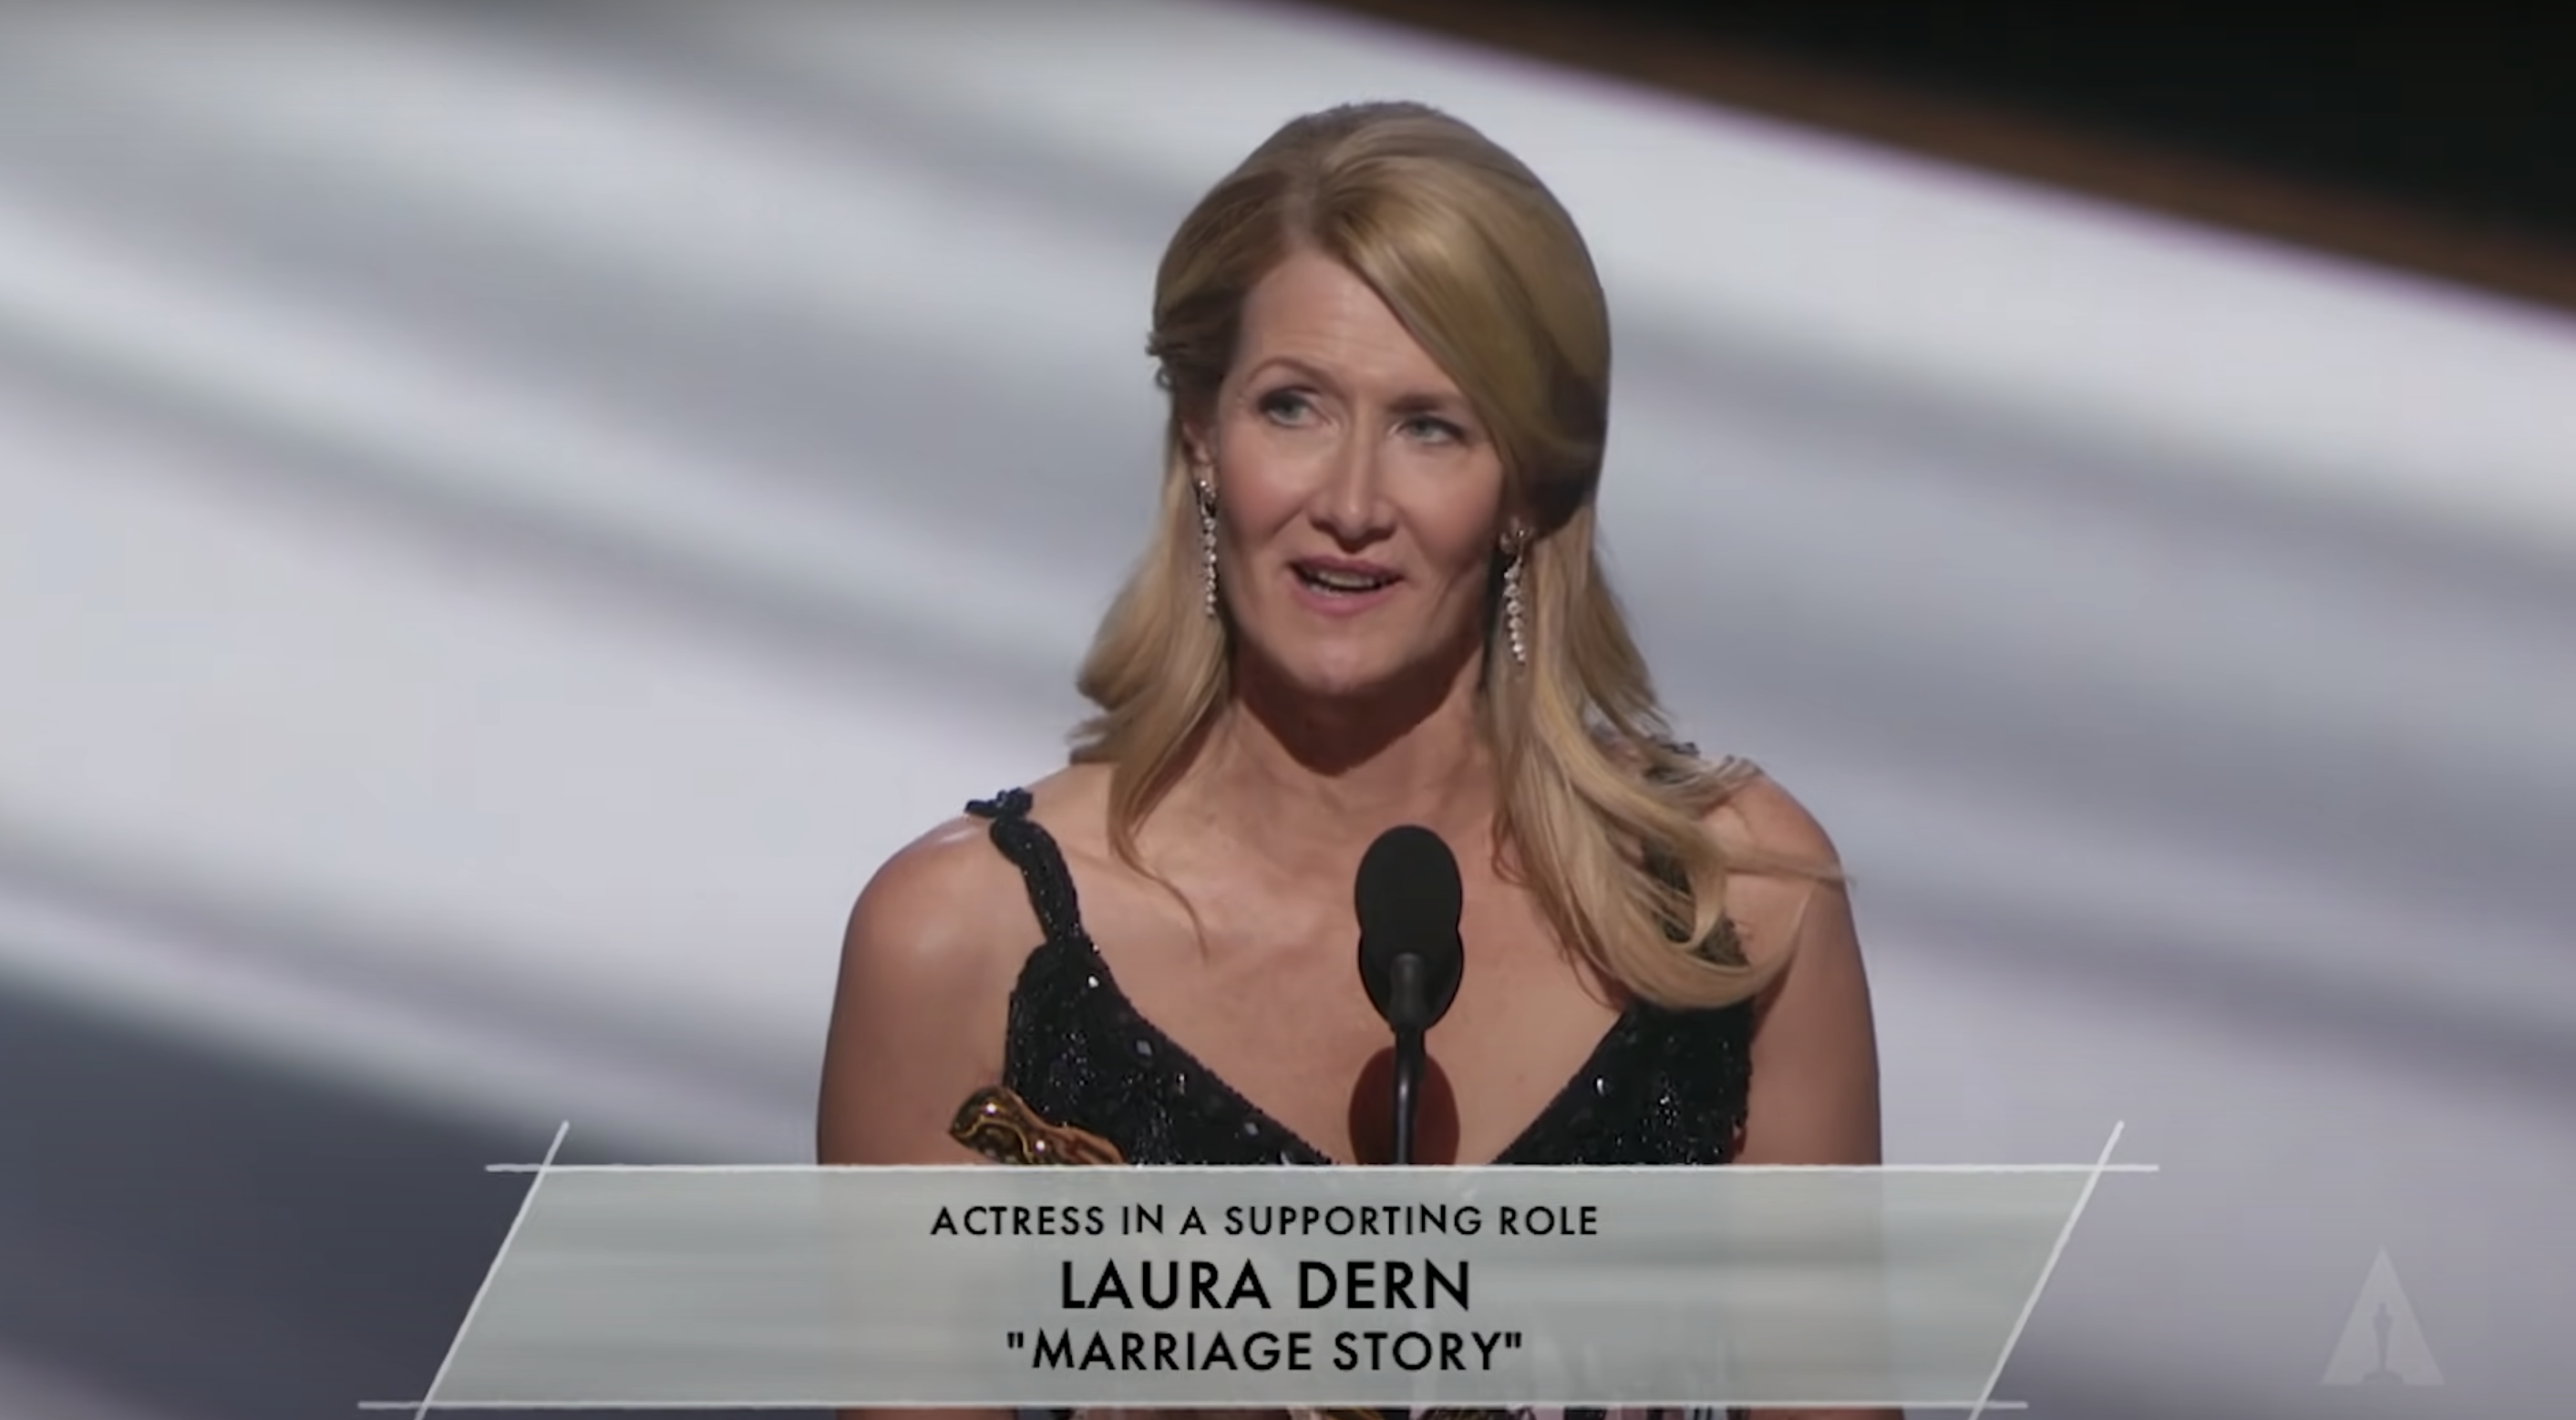 Laura accepting her Oscar